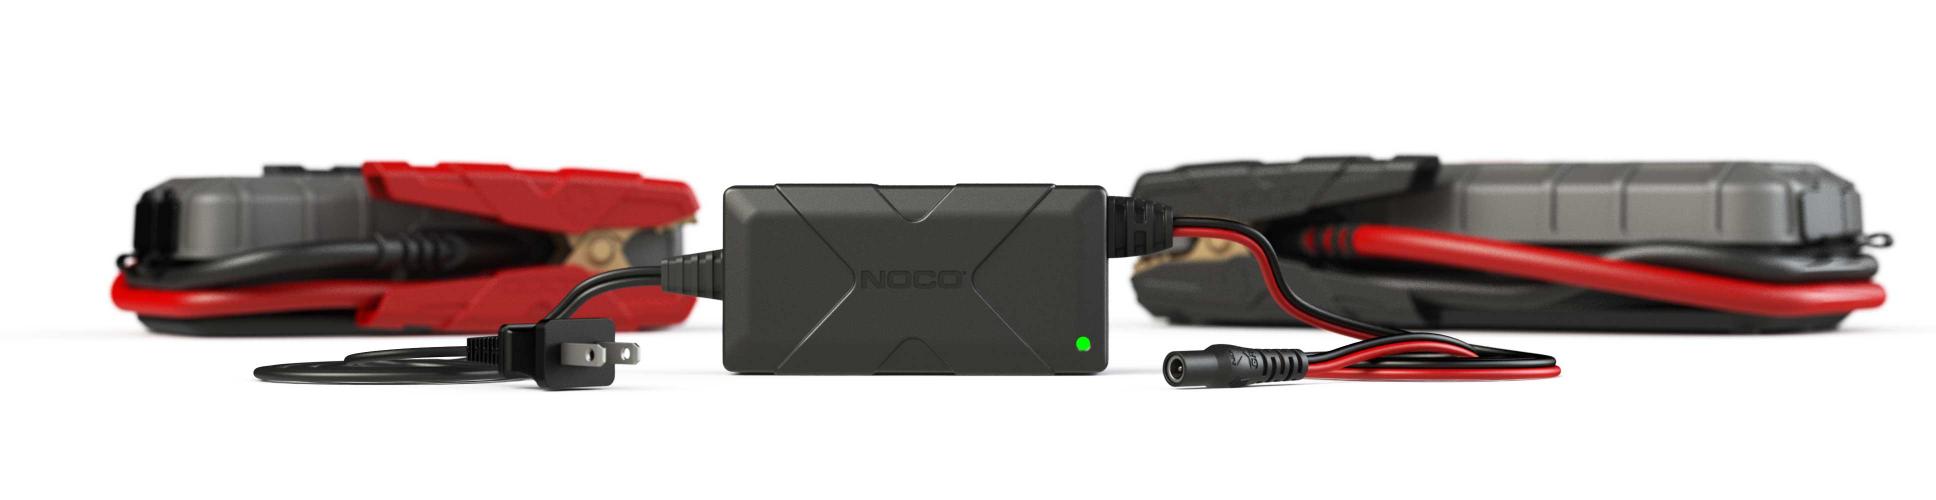 14V AC/DC Adapter For NOCO XGC4 56W XGC Genius Boost HD GB70 Pro GB150  BoostPro GB75 GB500 Max 2000 Amp Lithium Jump Starter 12V- 14V 4A 4000mA  Power